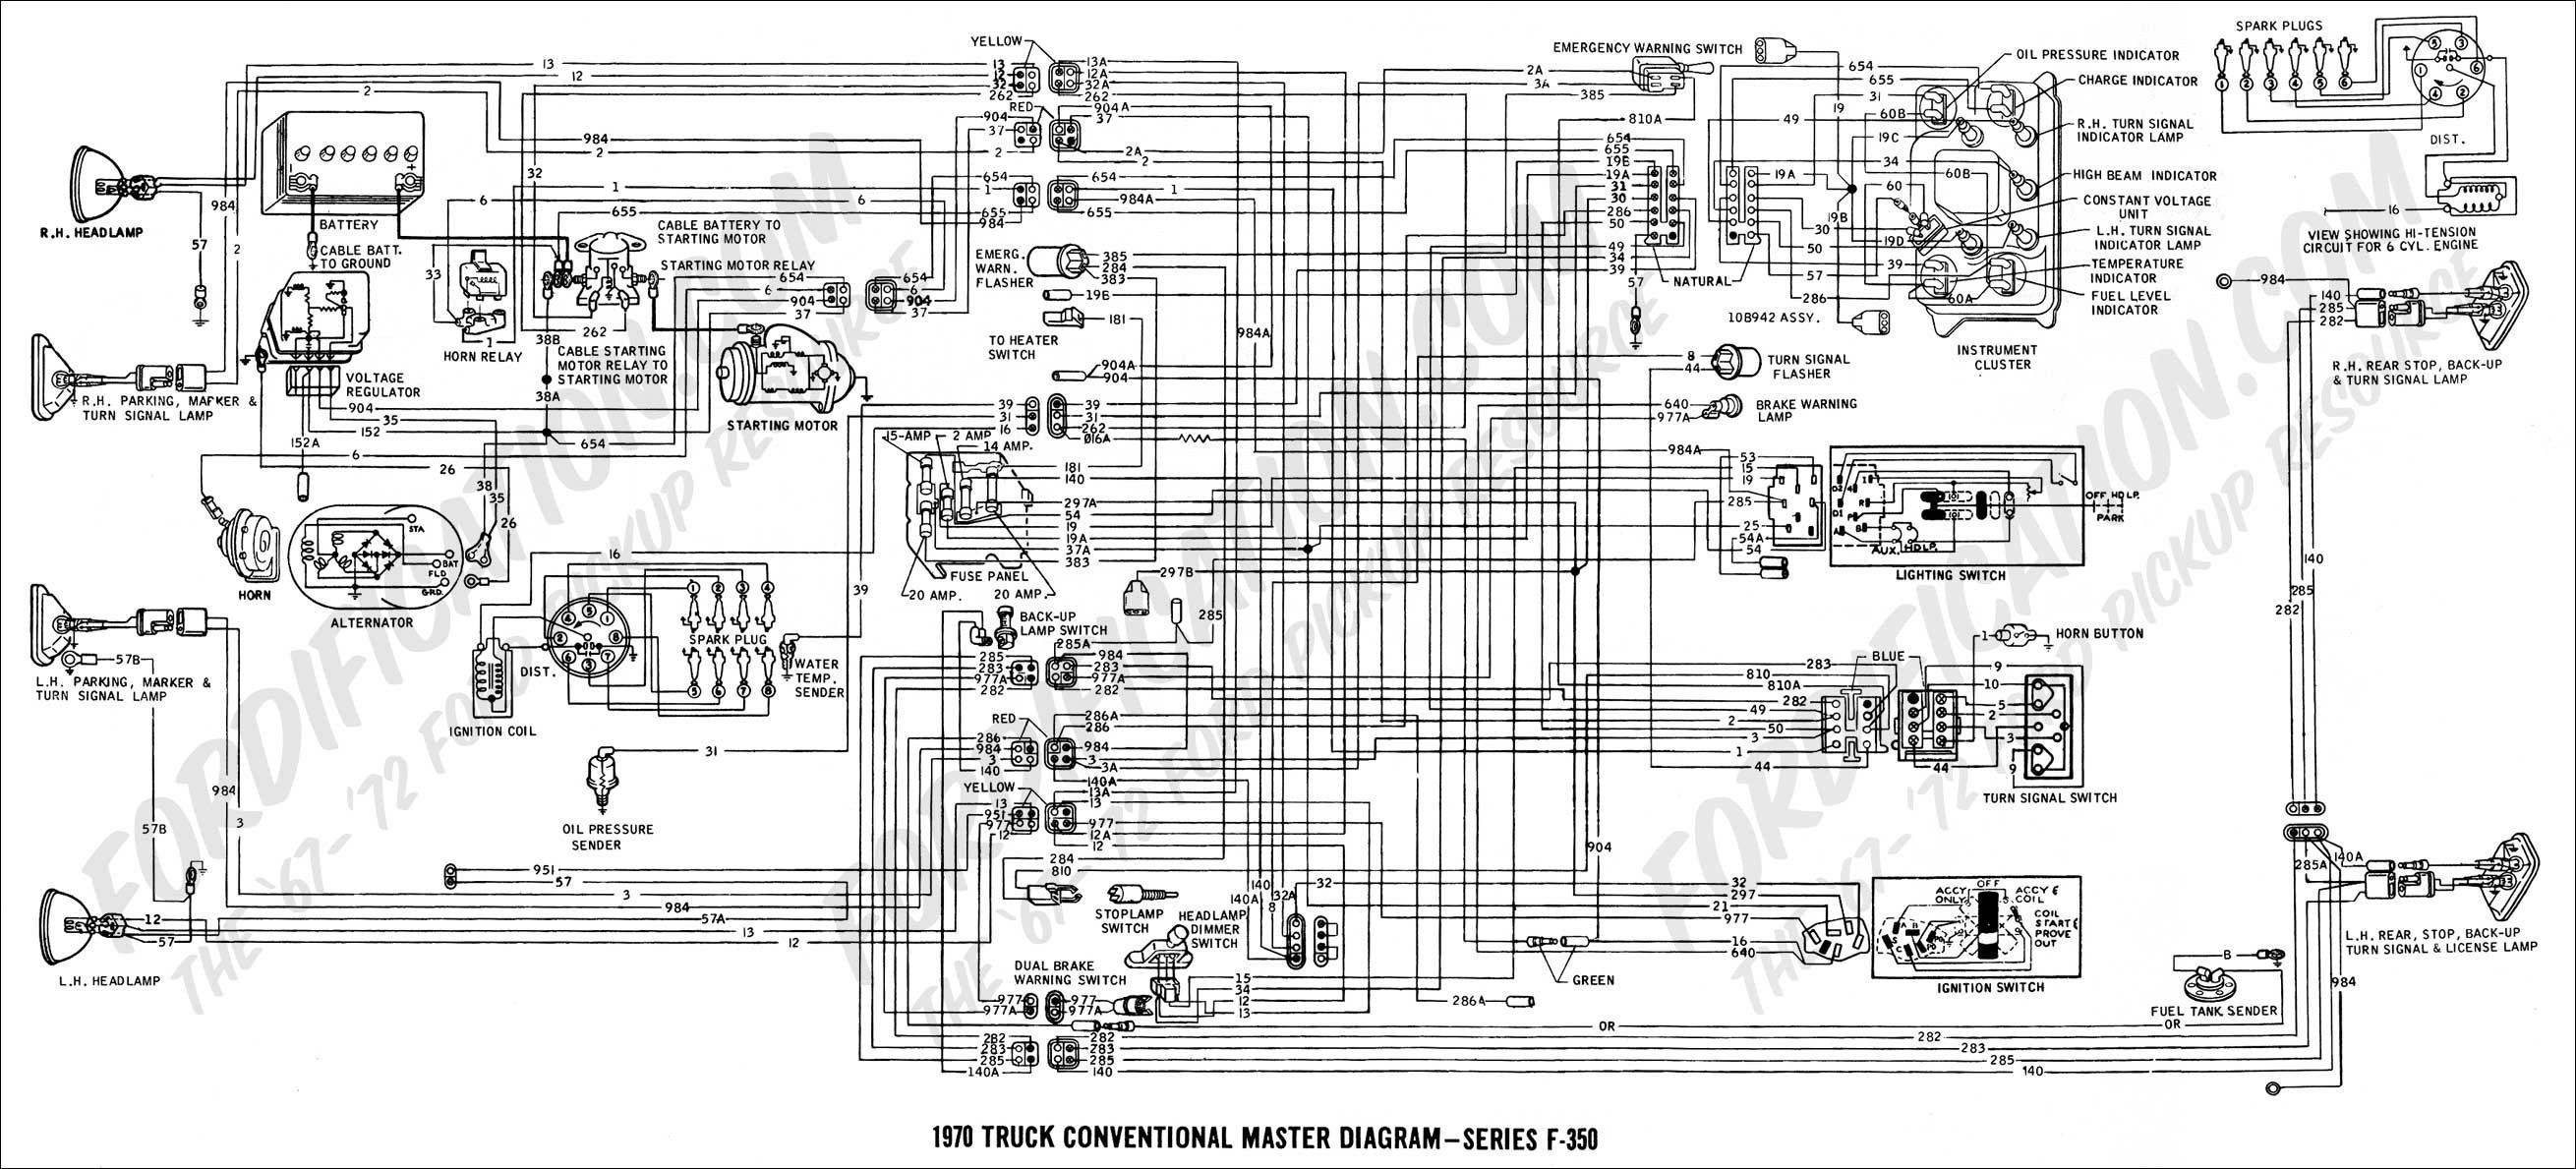 99 Sterling Truck Wiring Diagram Truck Air System Diagram Hayes Brakesmart Maxbrake Controllers – My Of 99 Sterling Truck Wiring Diagram